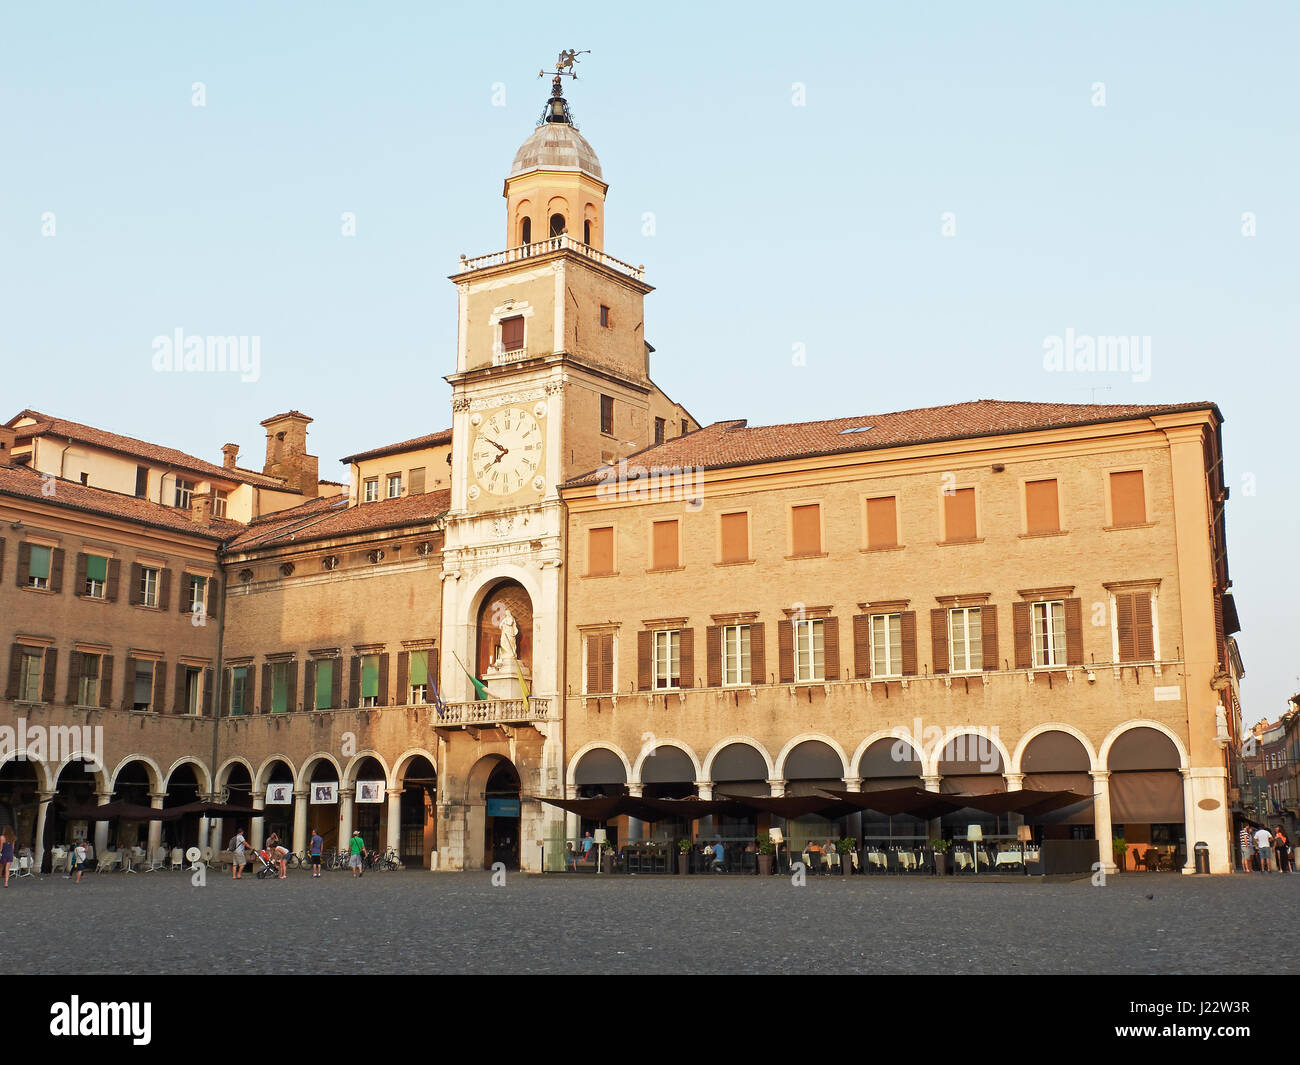 Torre delle Orologio, Clock tower, of Palazzo Comunale, city hall, in Piazza Grande of Modena at sunset. Emilia-Romagna. Italy Stock Photo